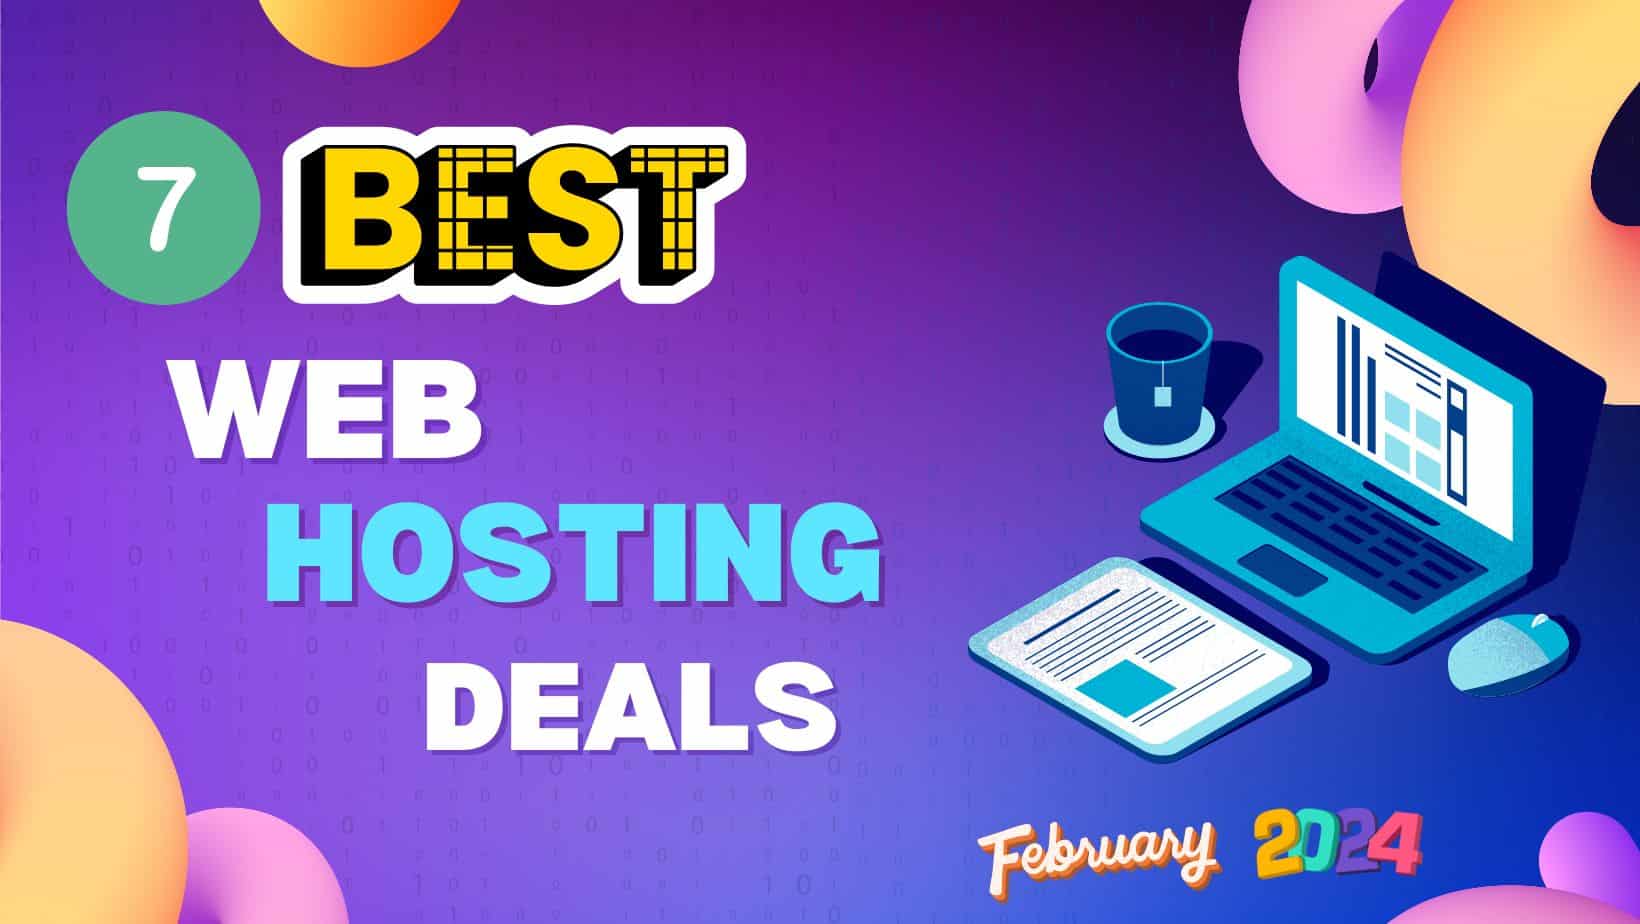 7 best web hosting deals